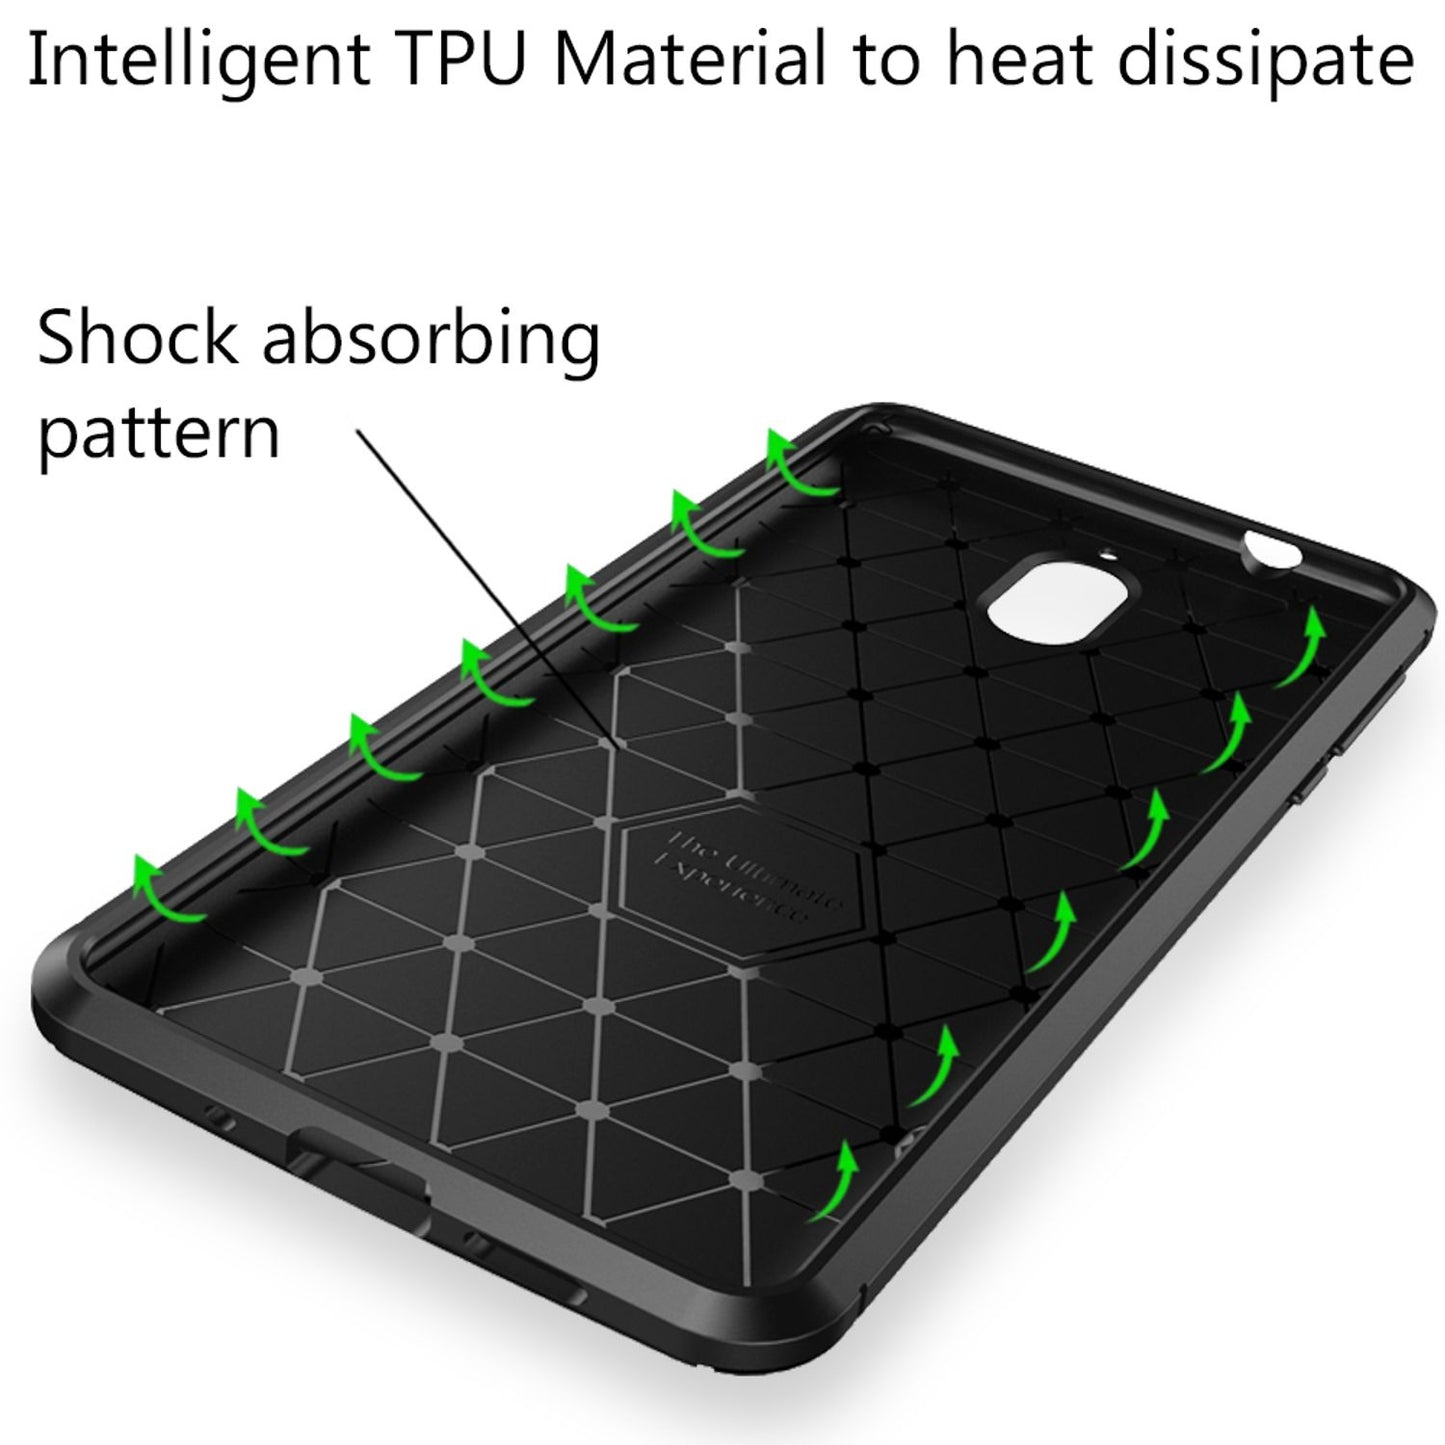 NALIA Handy Hülle für Nokia 3.1 (2018), Ultra Slim Silikon Cover Case TPU Schutz